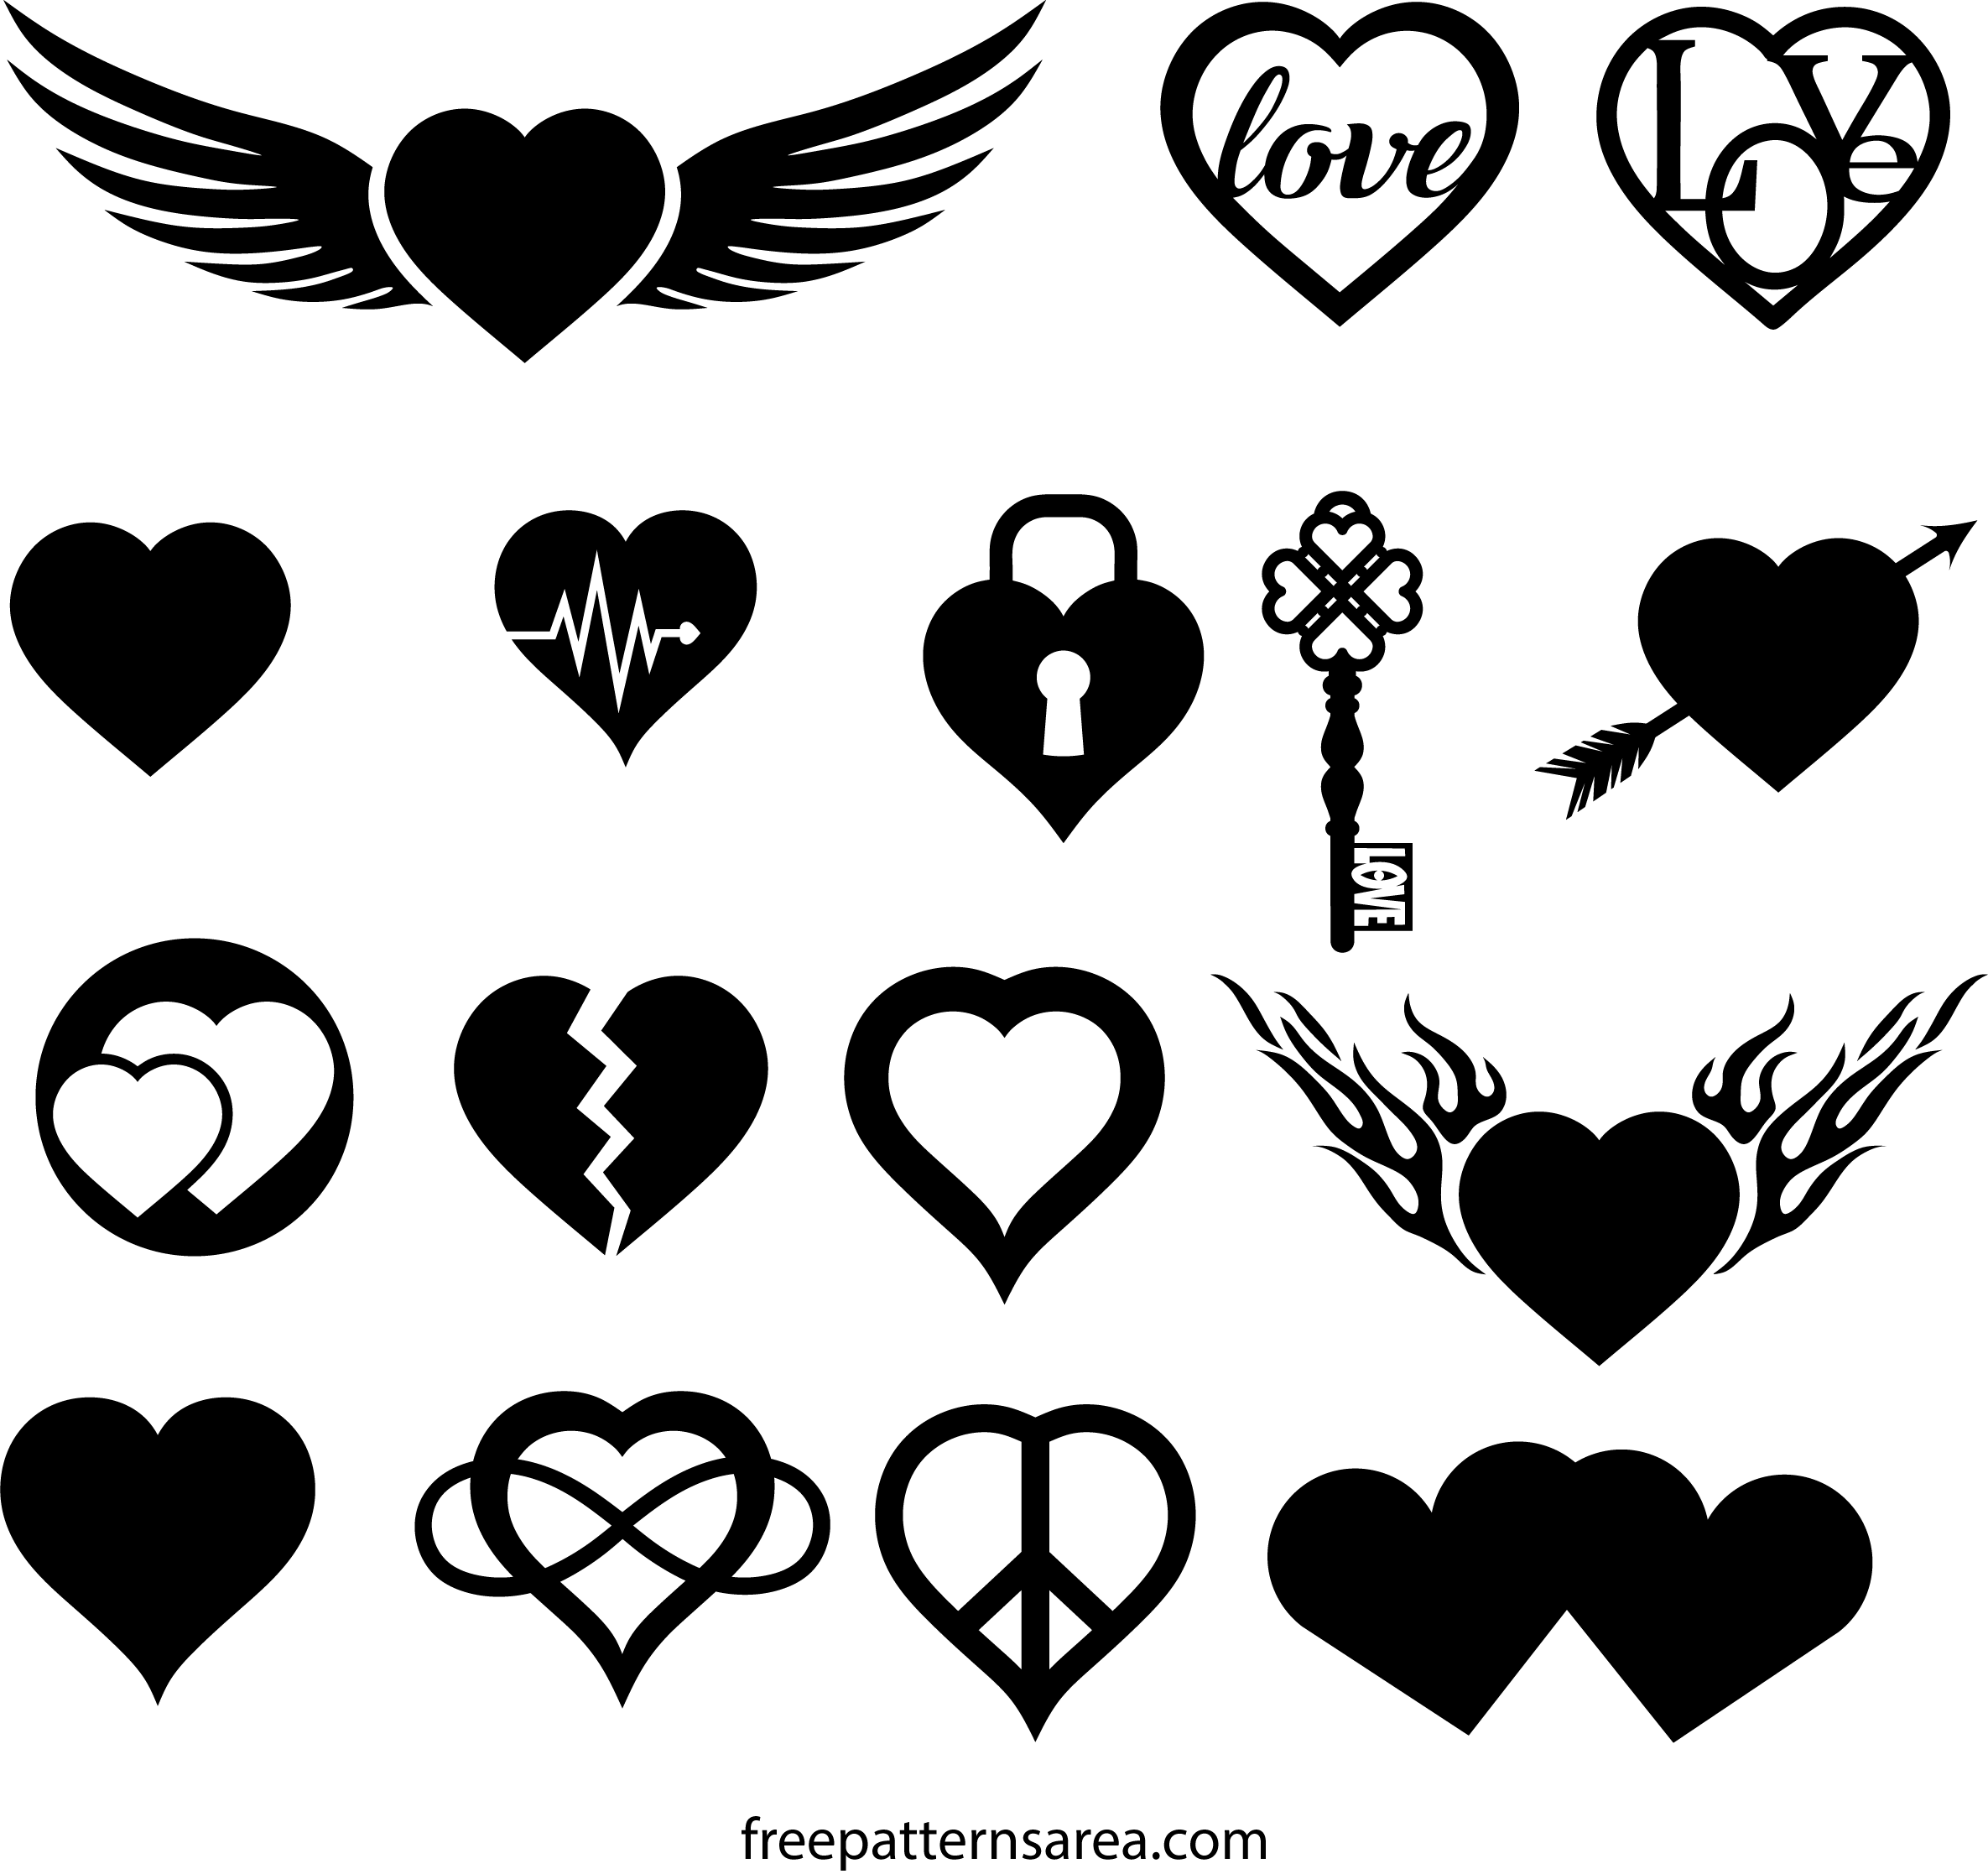 All Heart Logo - Free Love Heart Symbol Vectors | FreePatternsArea